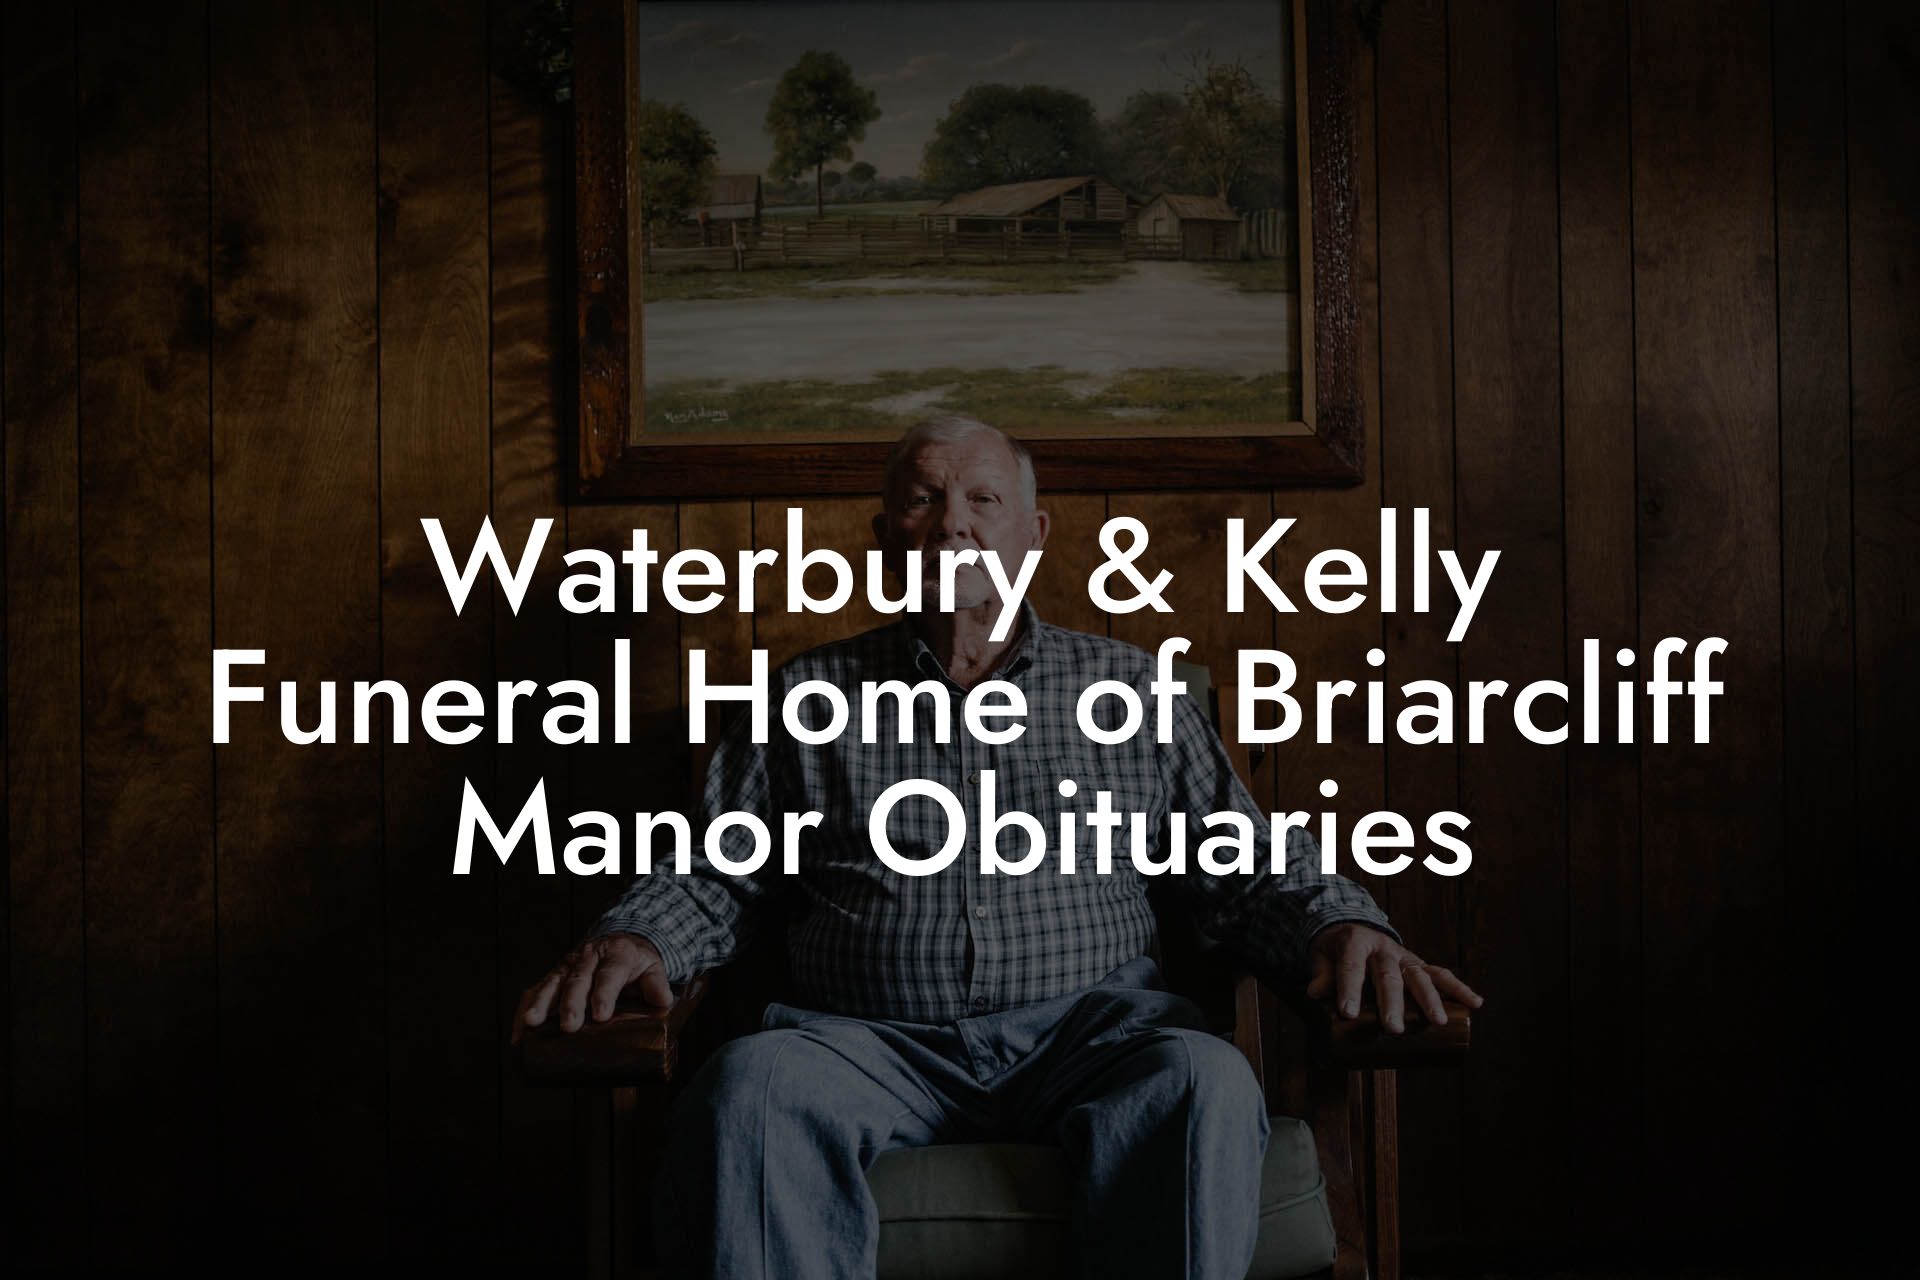 Waterbury & Kelly Funeral Home of Briarcliff Manor Obituaries